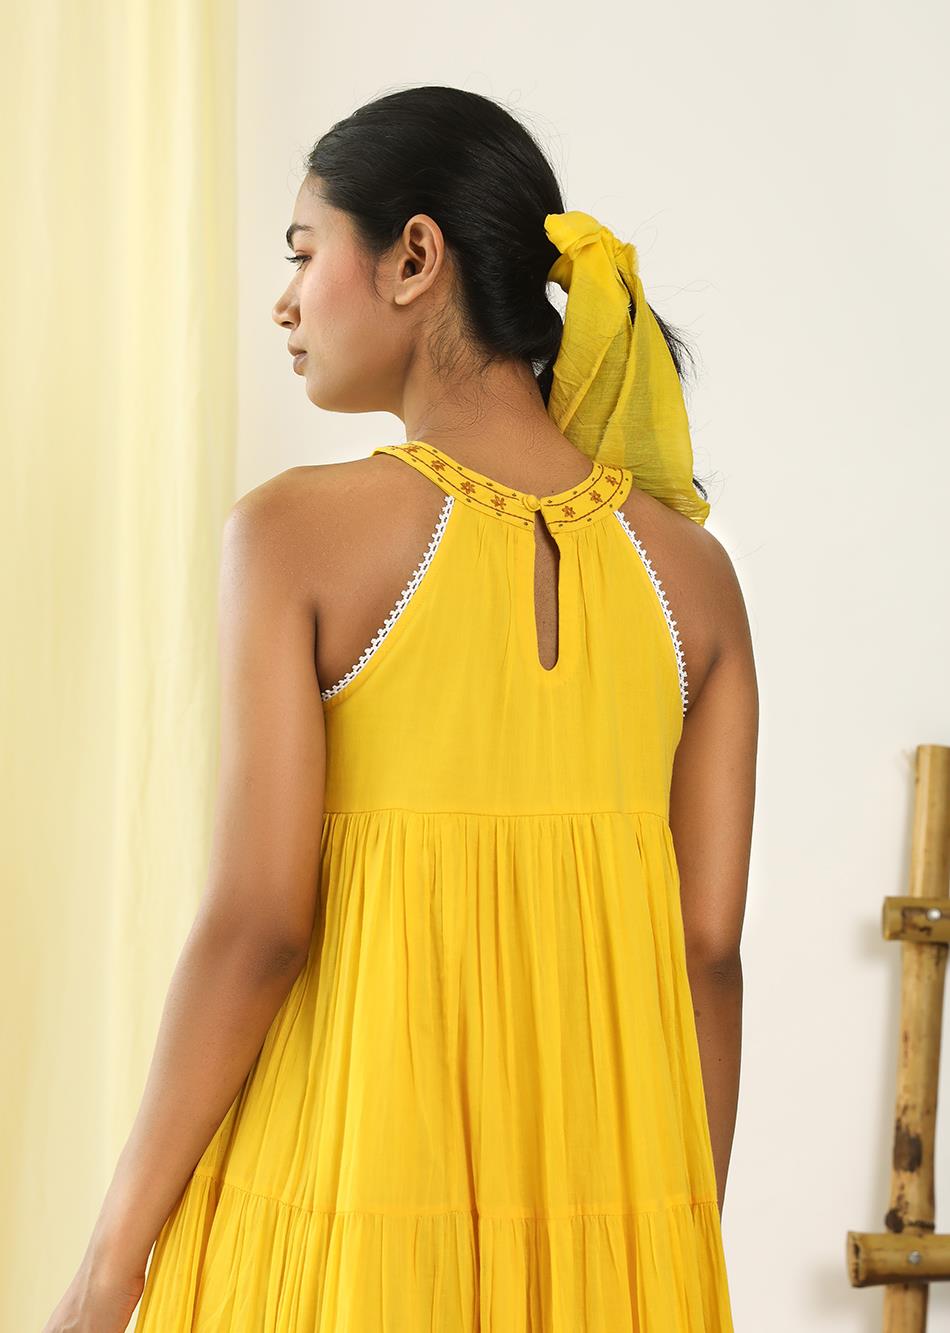 The Marigold Tiered Dress By Jovi Fashion